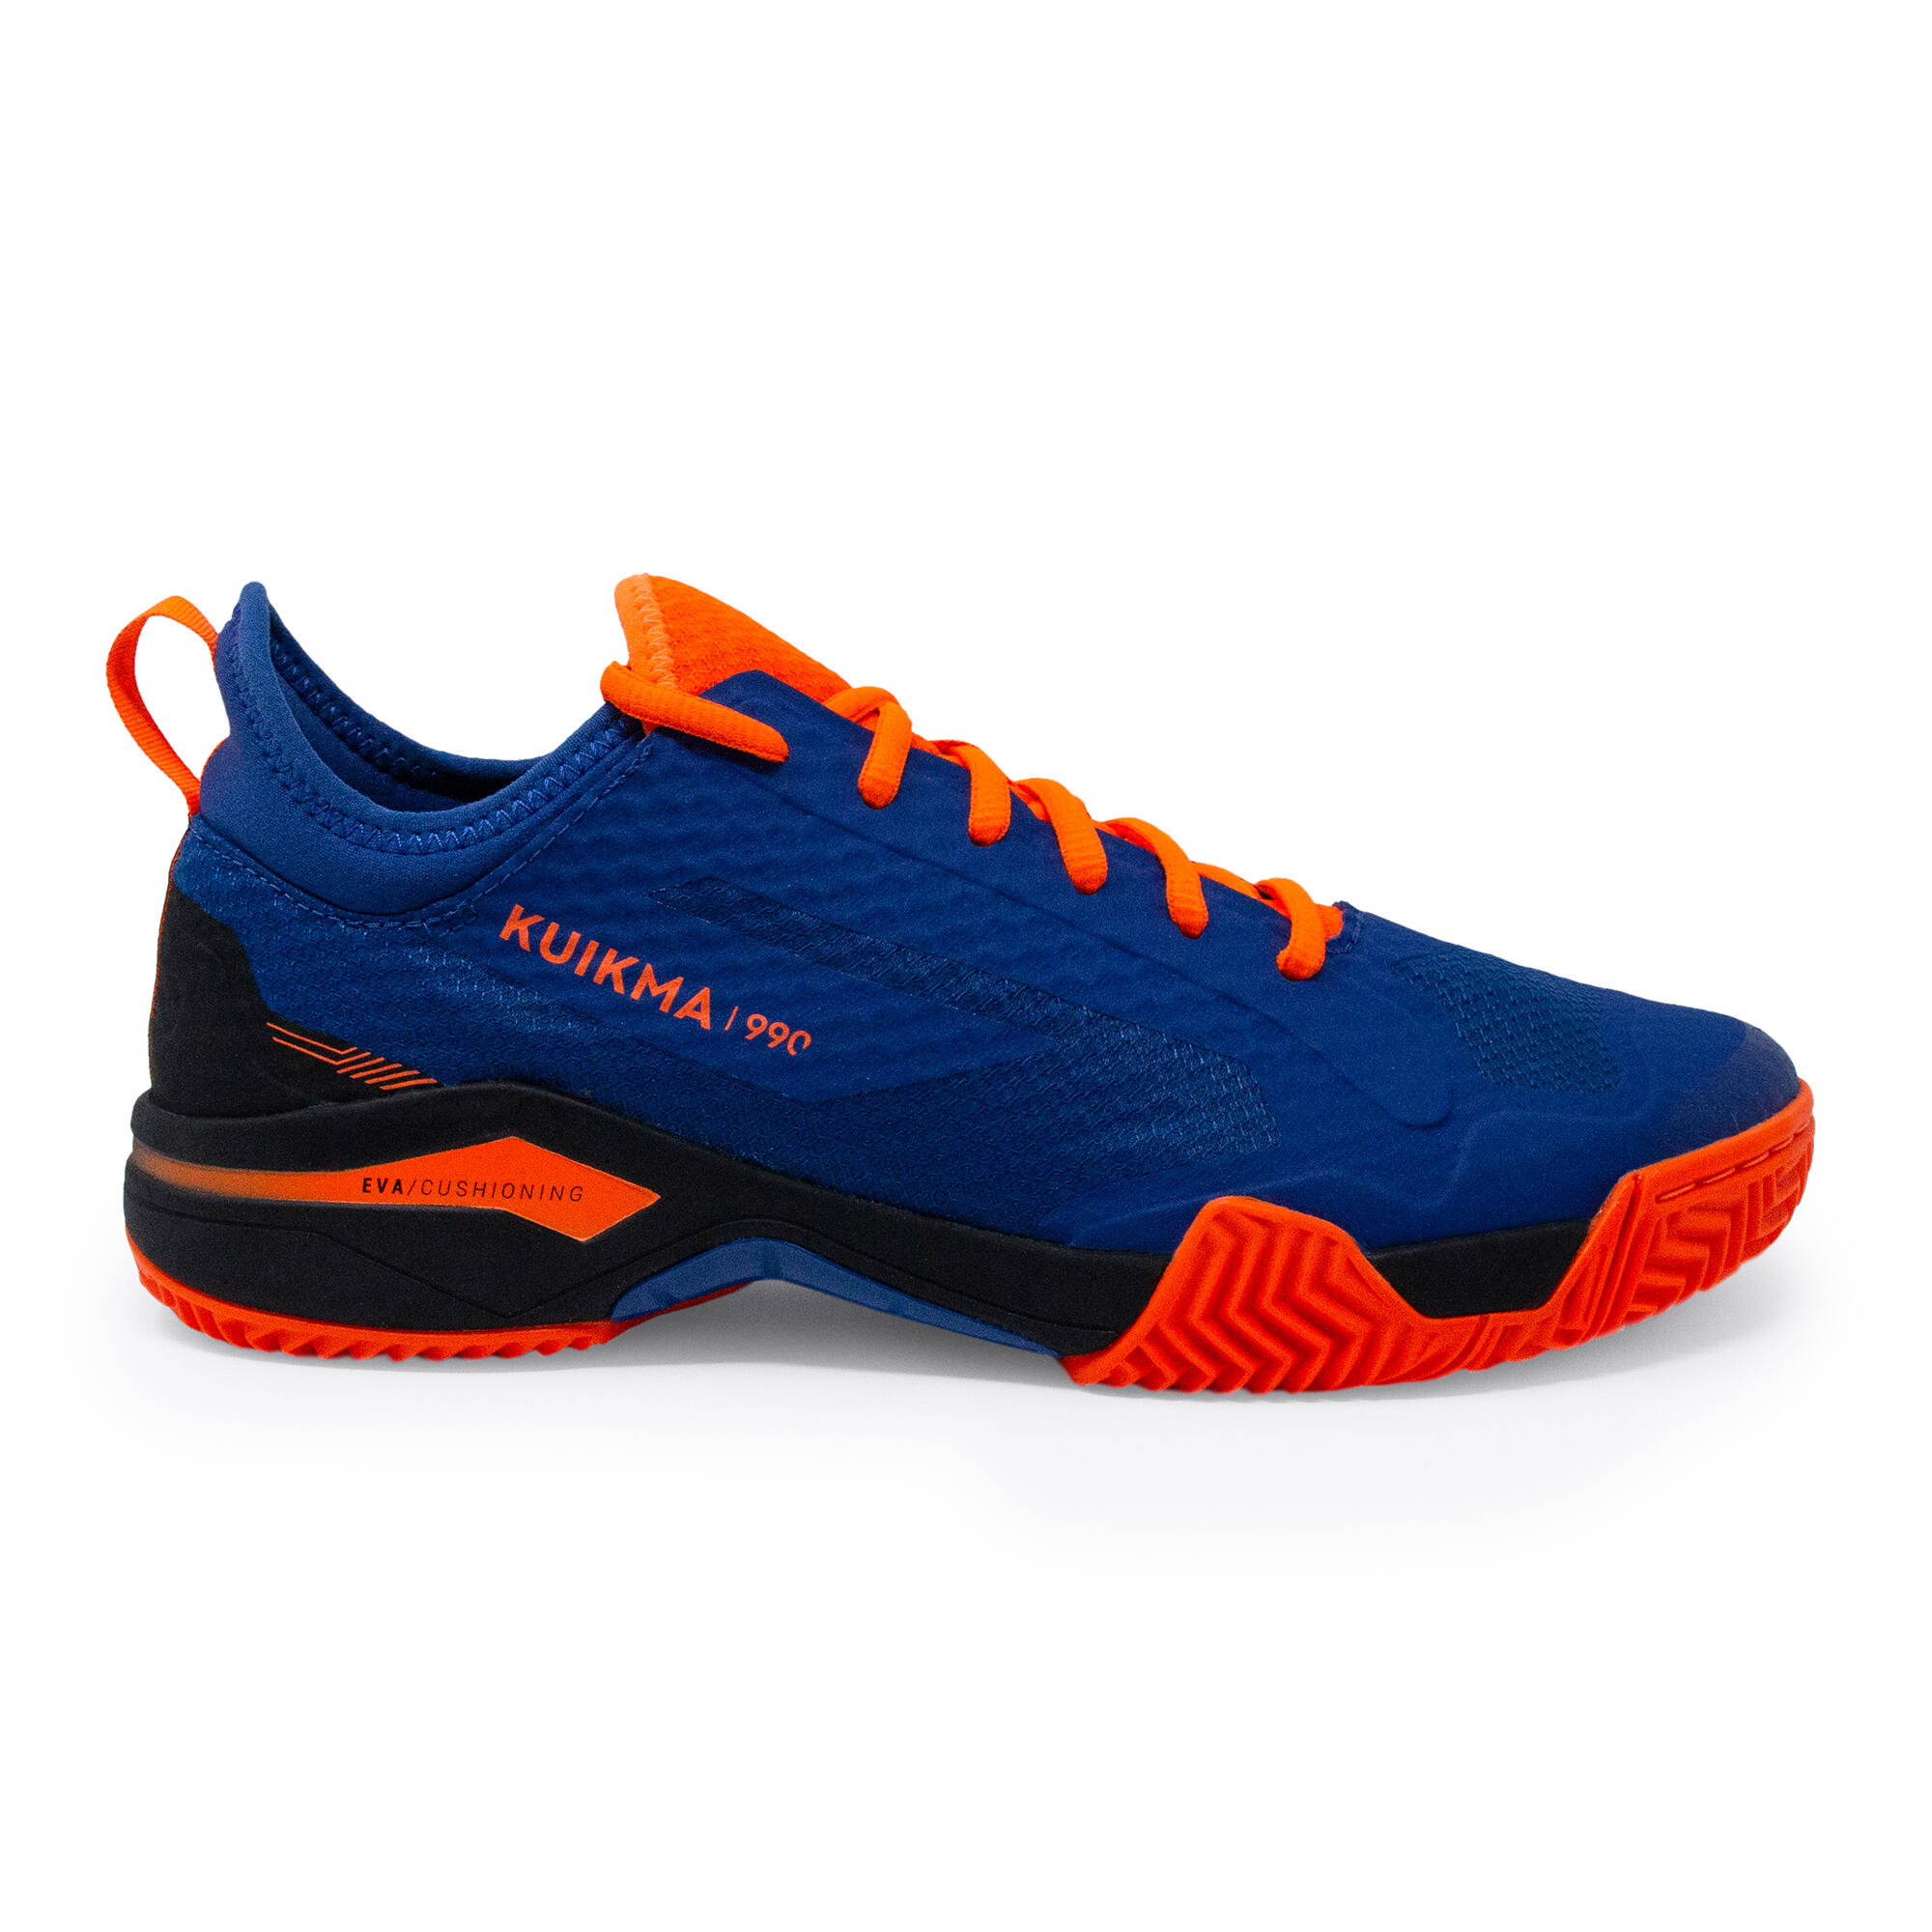 Men's Padel Shoes PS 990 Dynamic - Blue/Orange 5/16